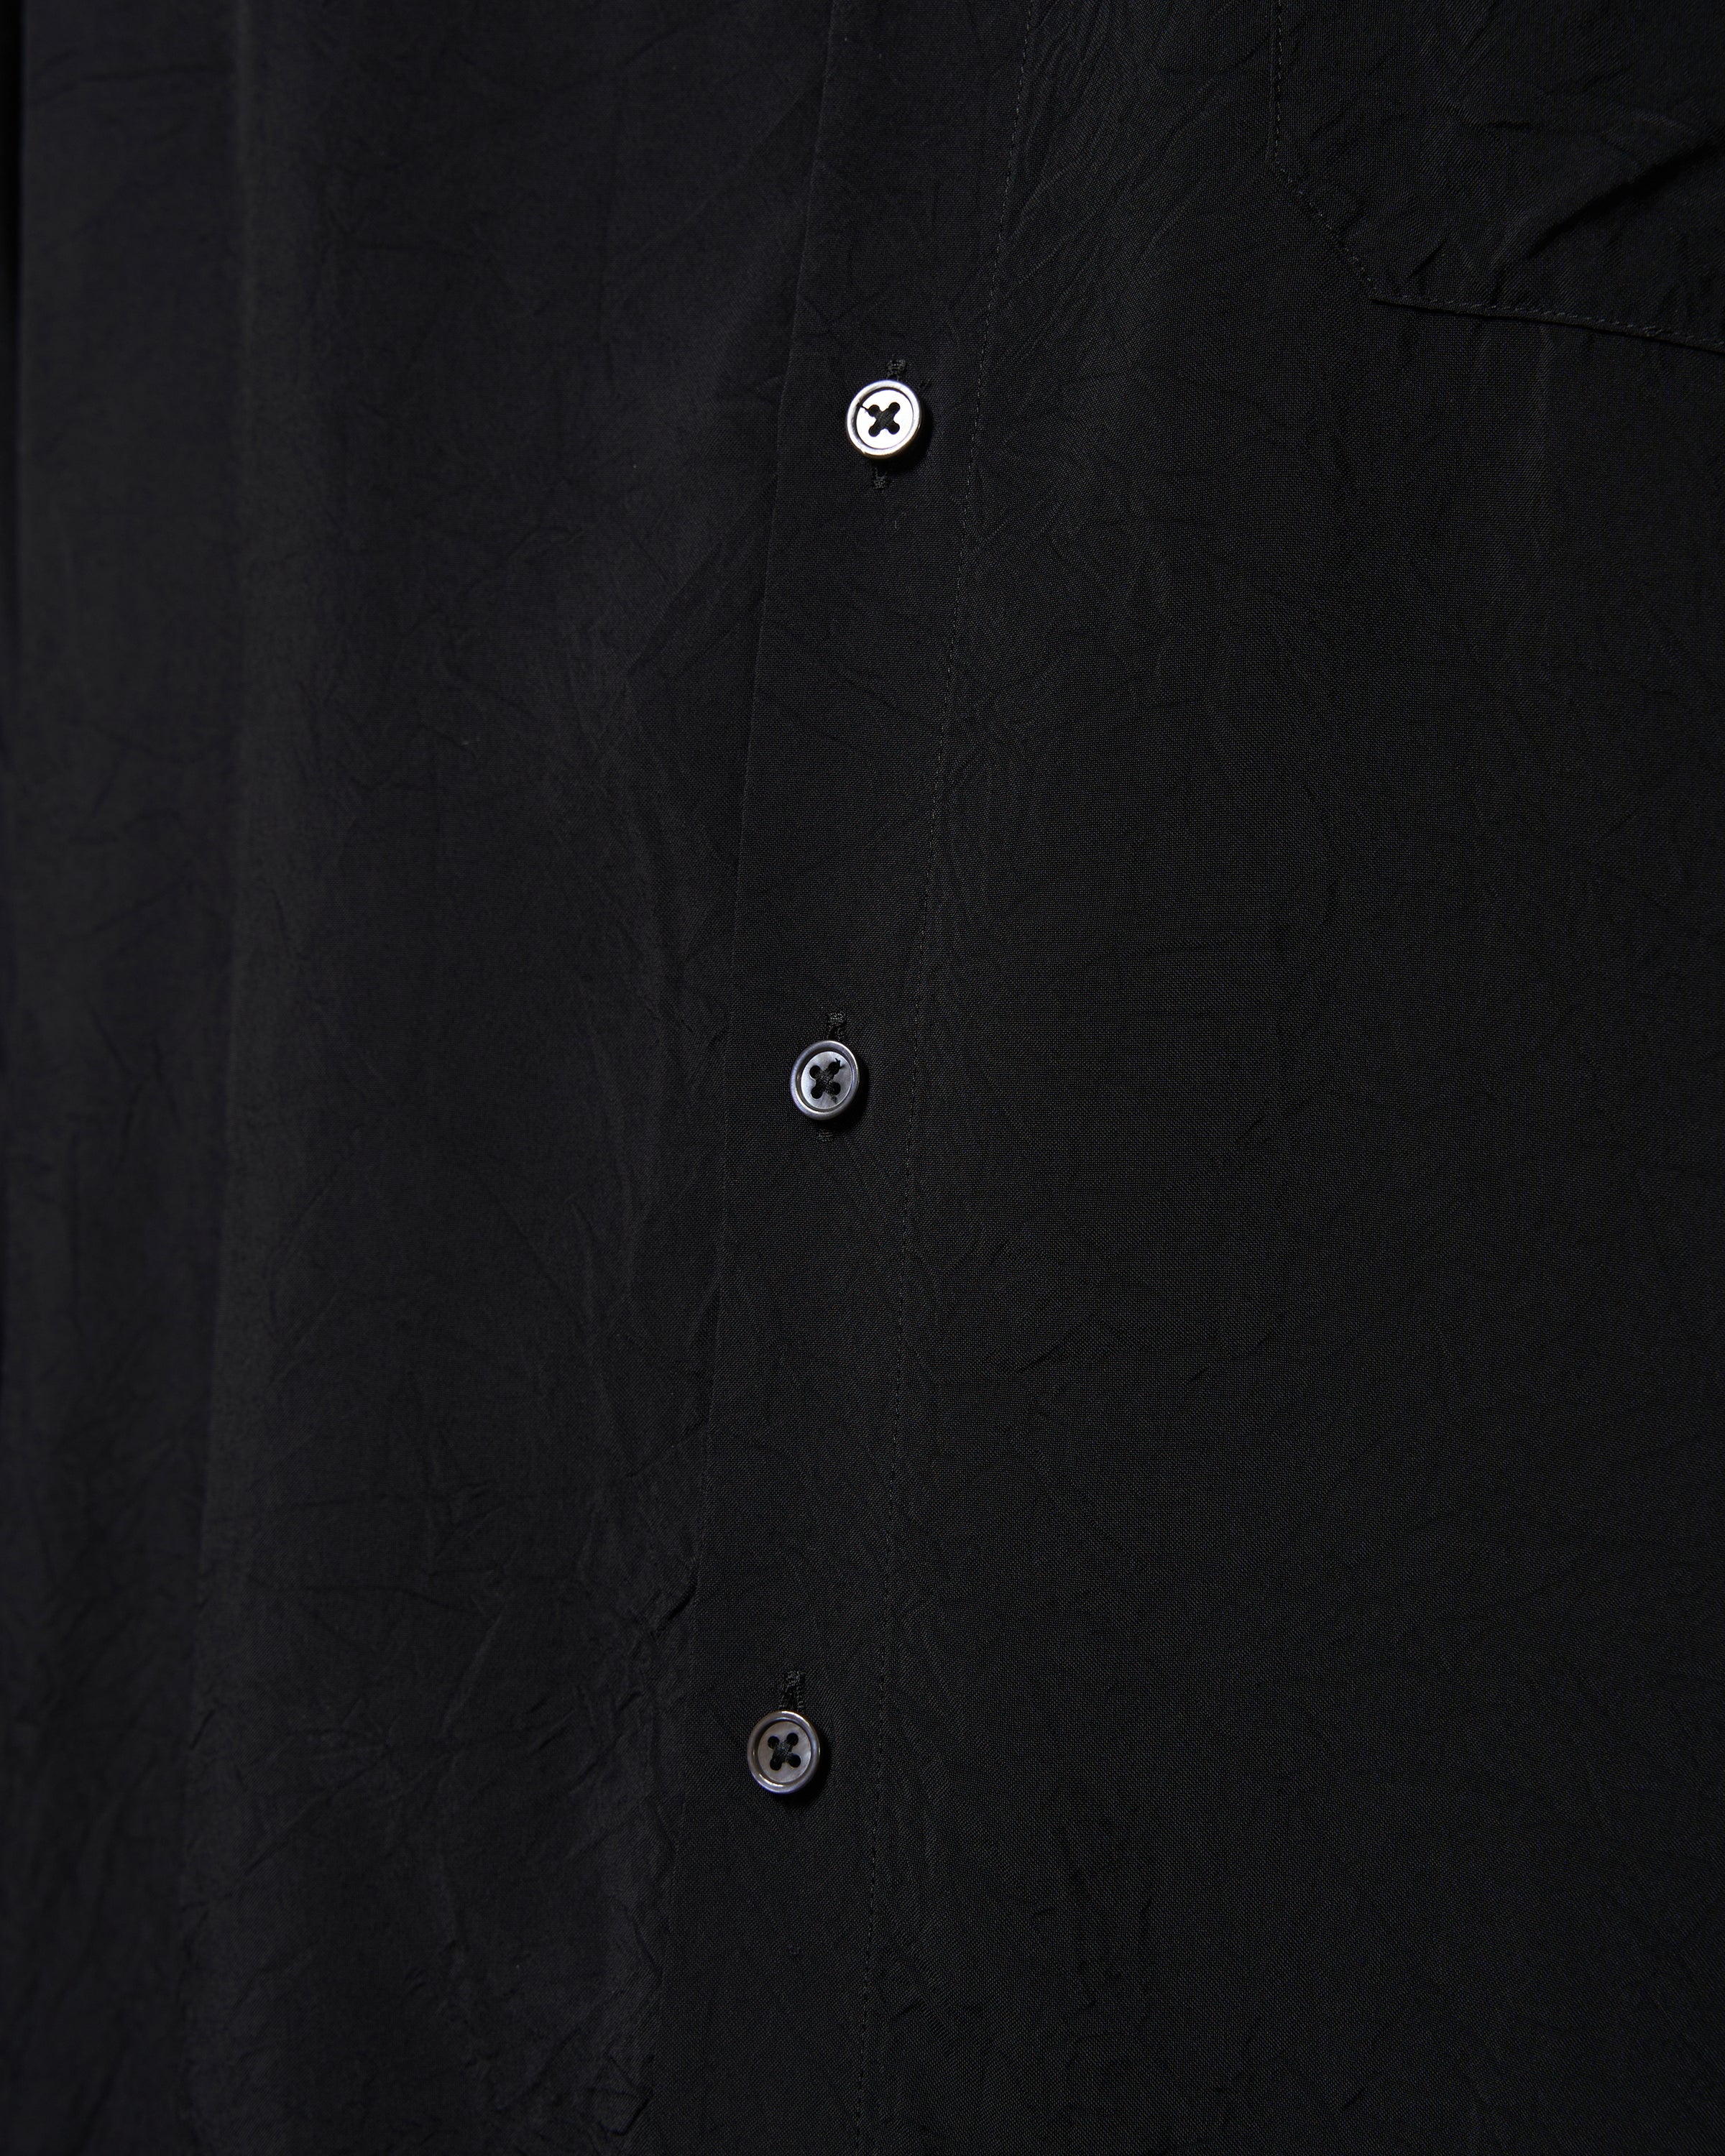 TOHNAI for keylime Tokyo Collarless Shirt, Black